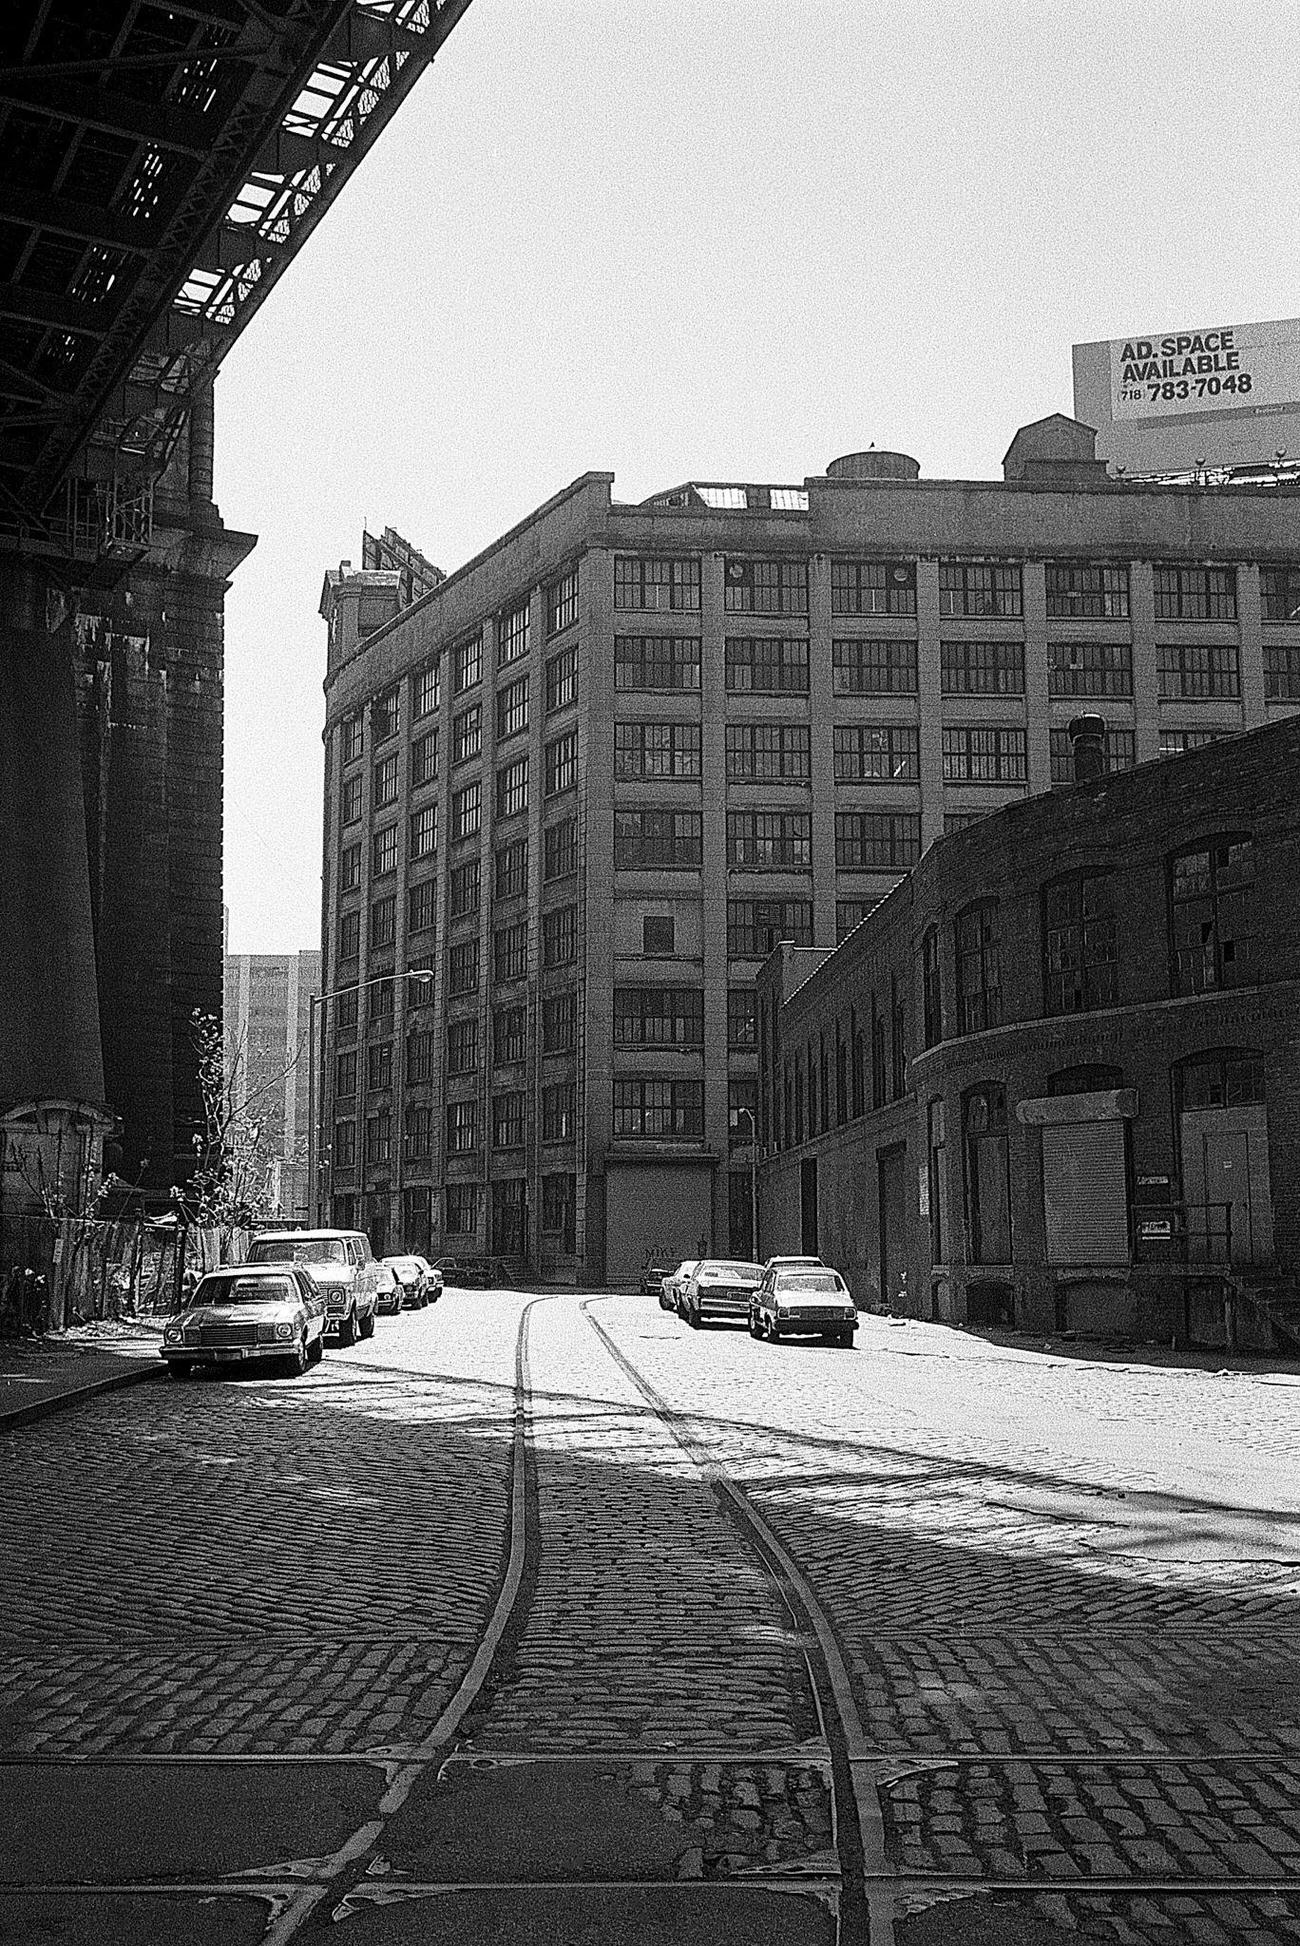 Trolley Tracks On Cobblestone Street Under Manhattan Bridge In Brooklyn, 1990